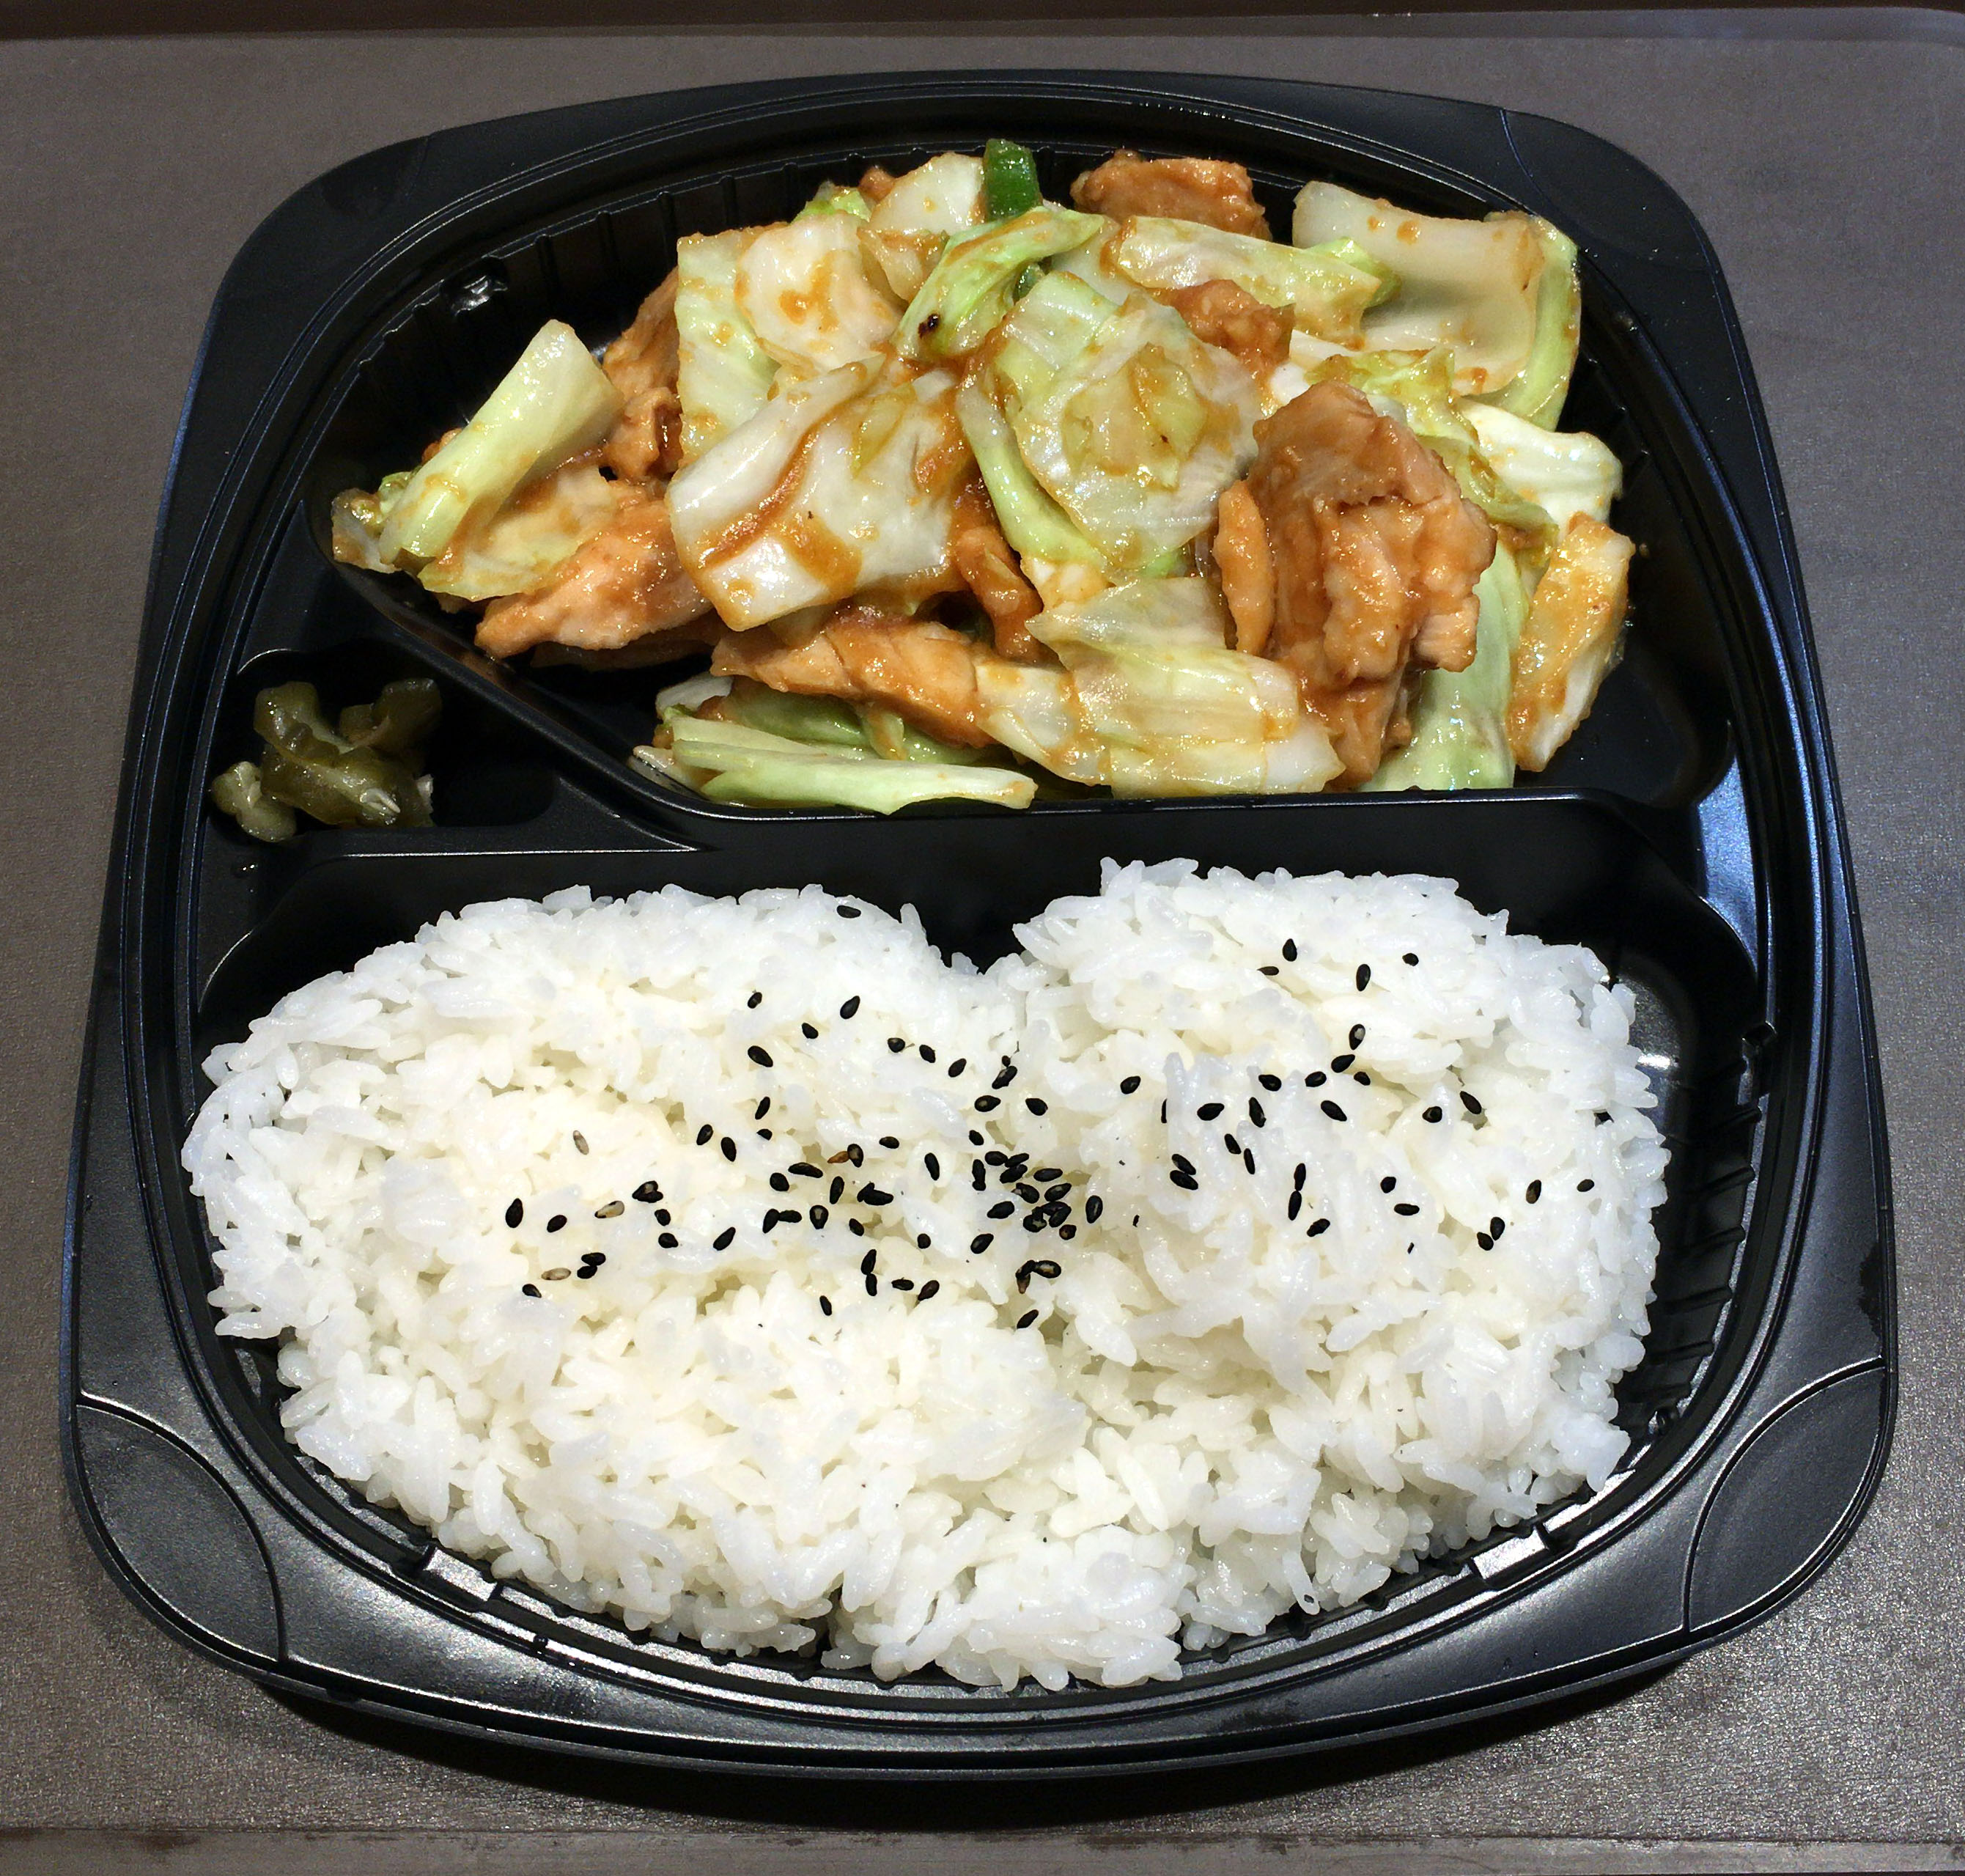 https://upload.wikimedia.org/wikipedia/commons/c/c0/Grilled_chicken_lunch_box_of_Origin_Bento.jpg